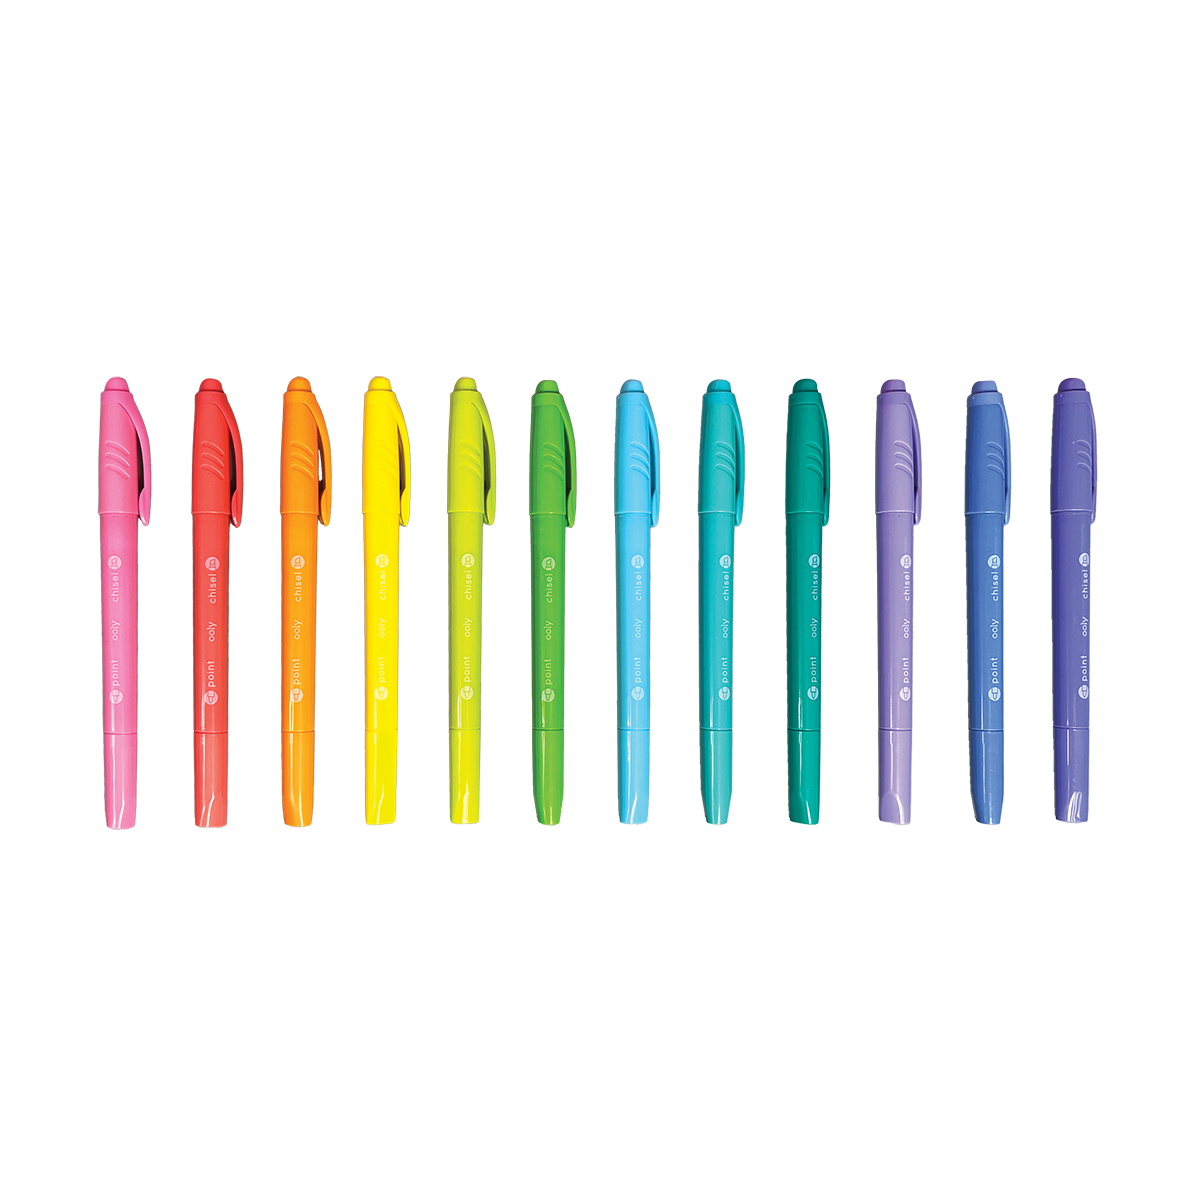 6 Pastel Colors Dual Tip Sketch Markers 12 Packs